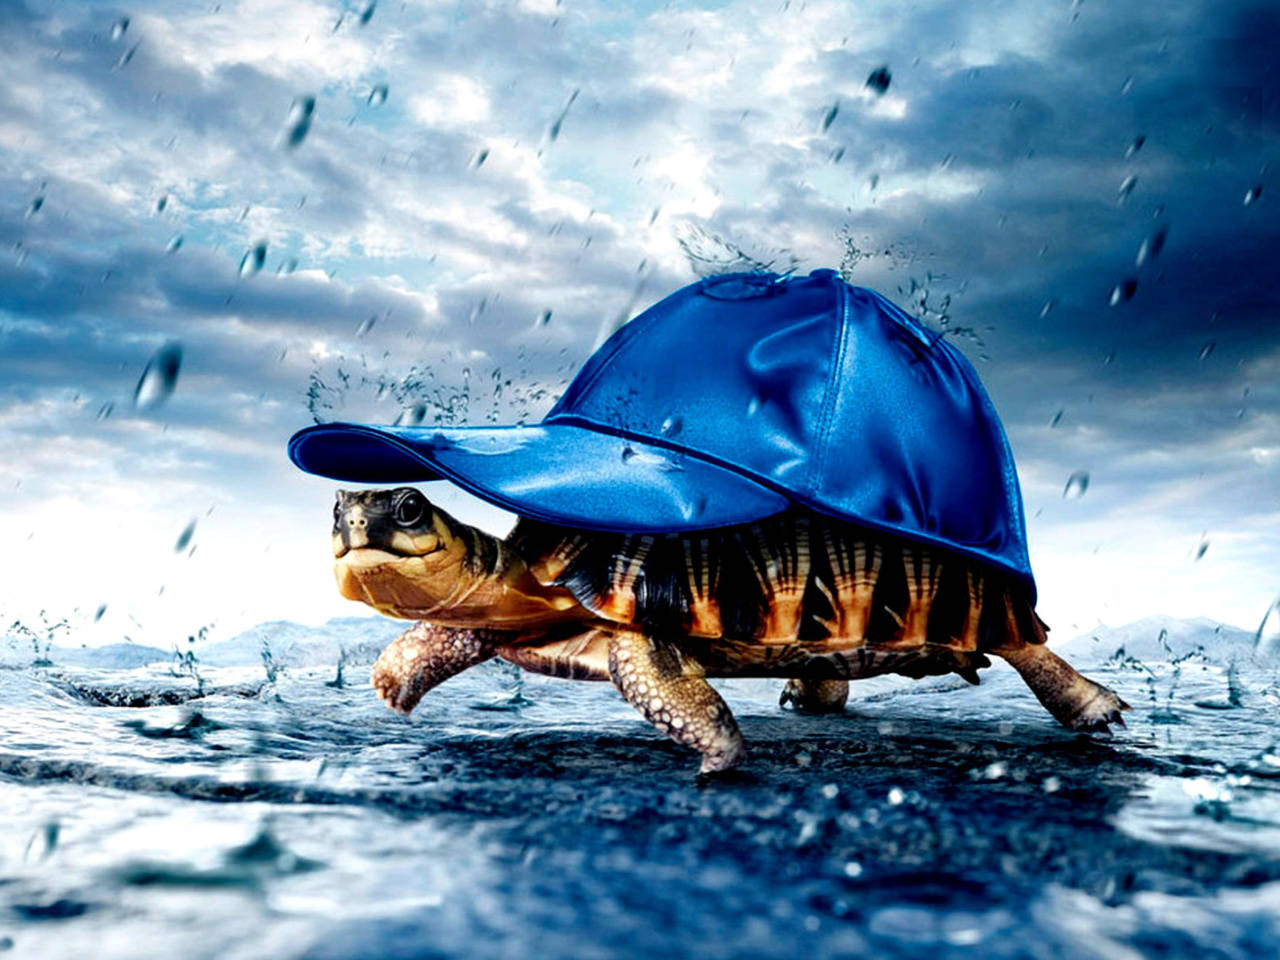 Cute Turtle With Blue Baseball Cap